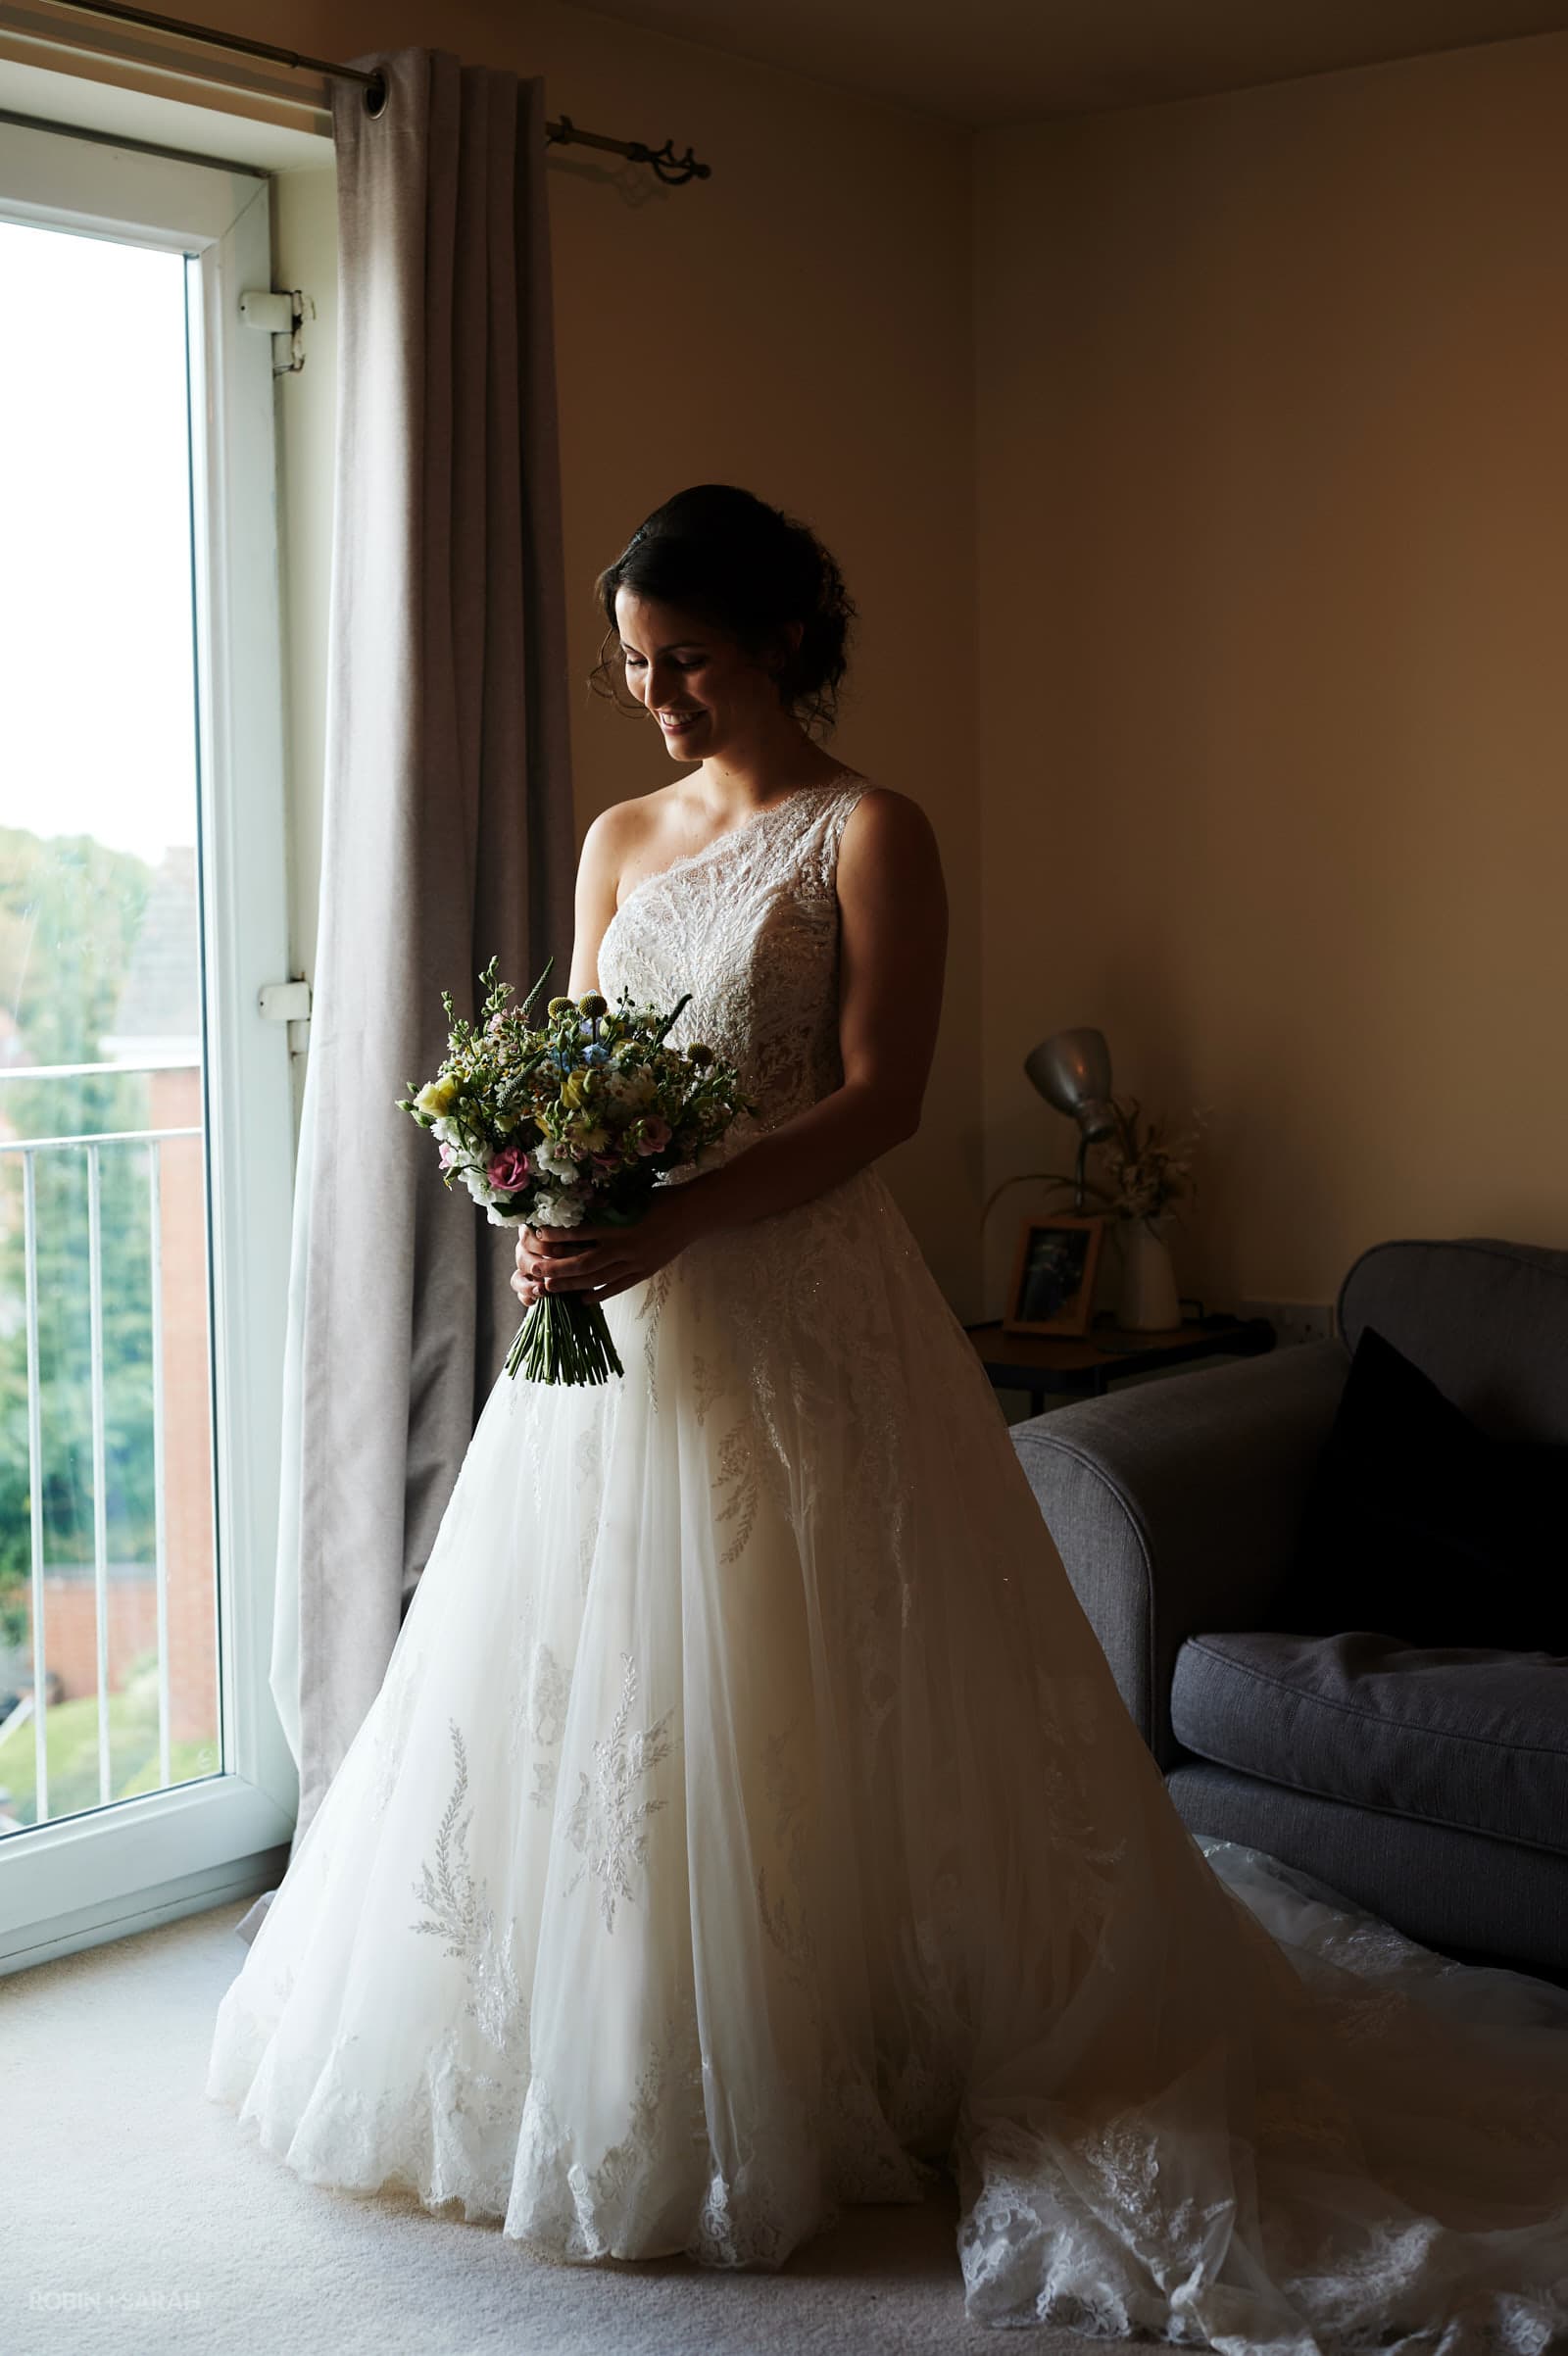 Full length portrait of bride holding bouquet